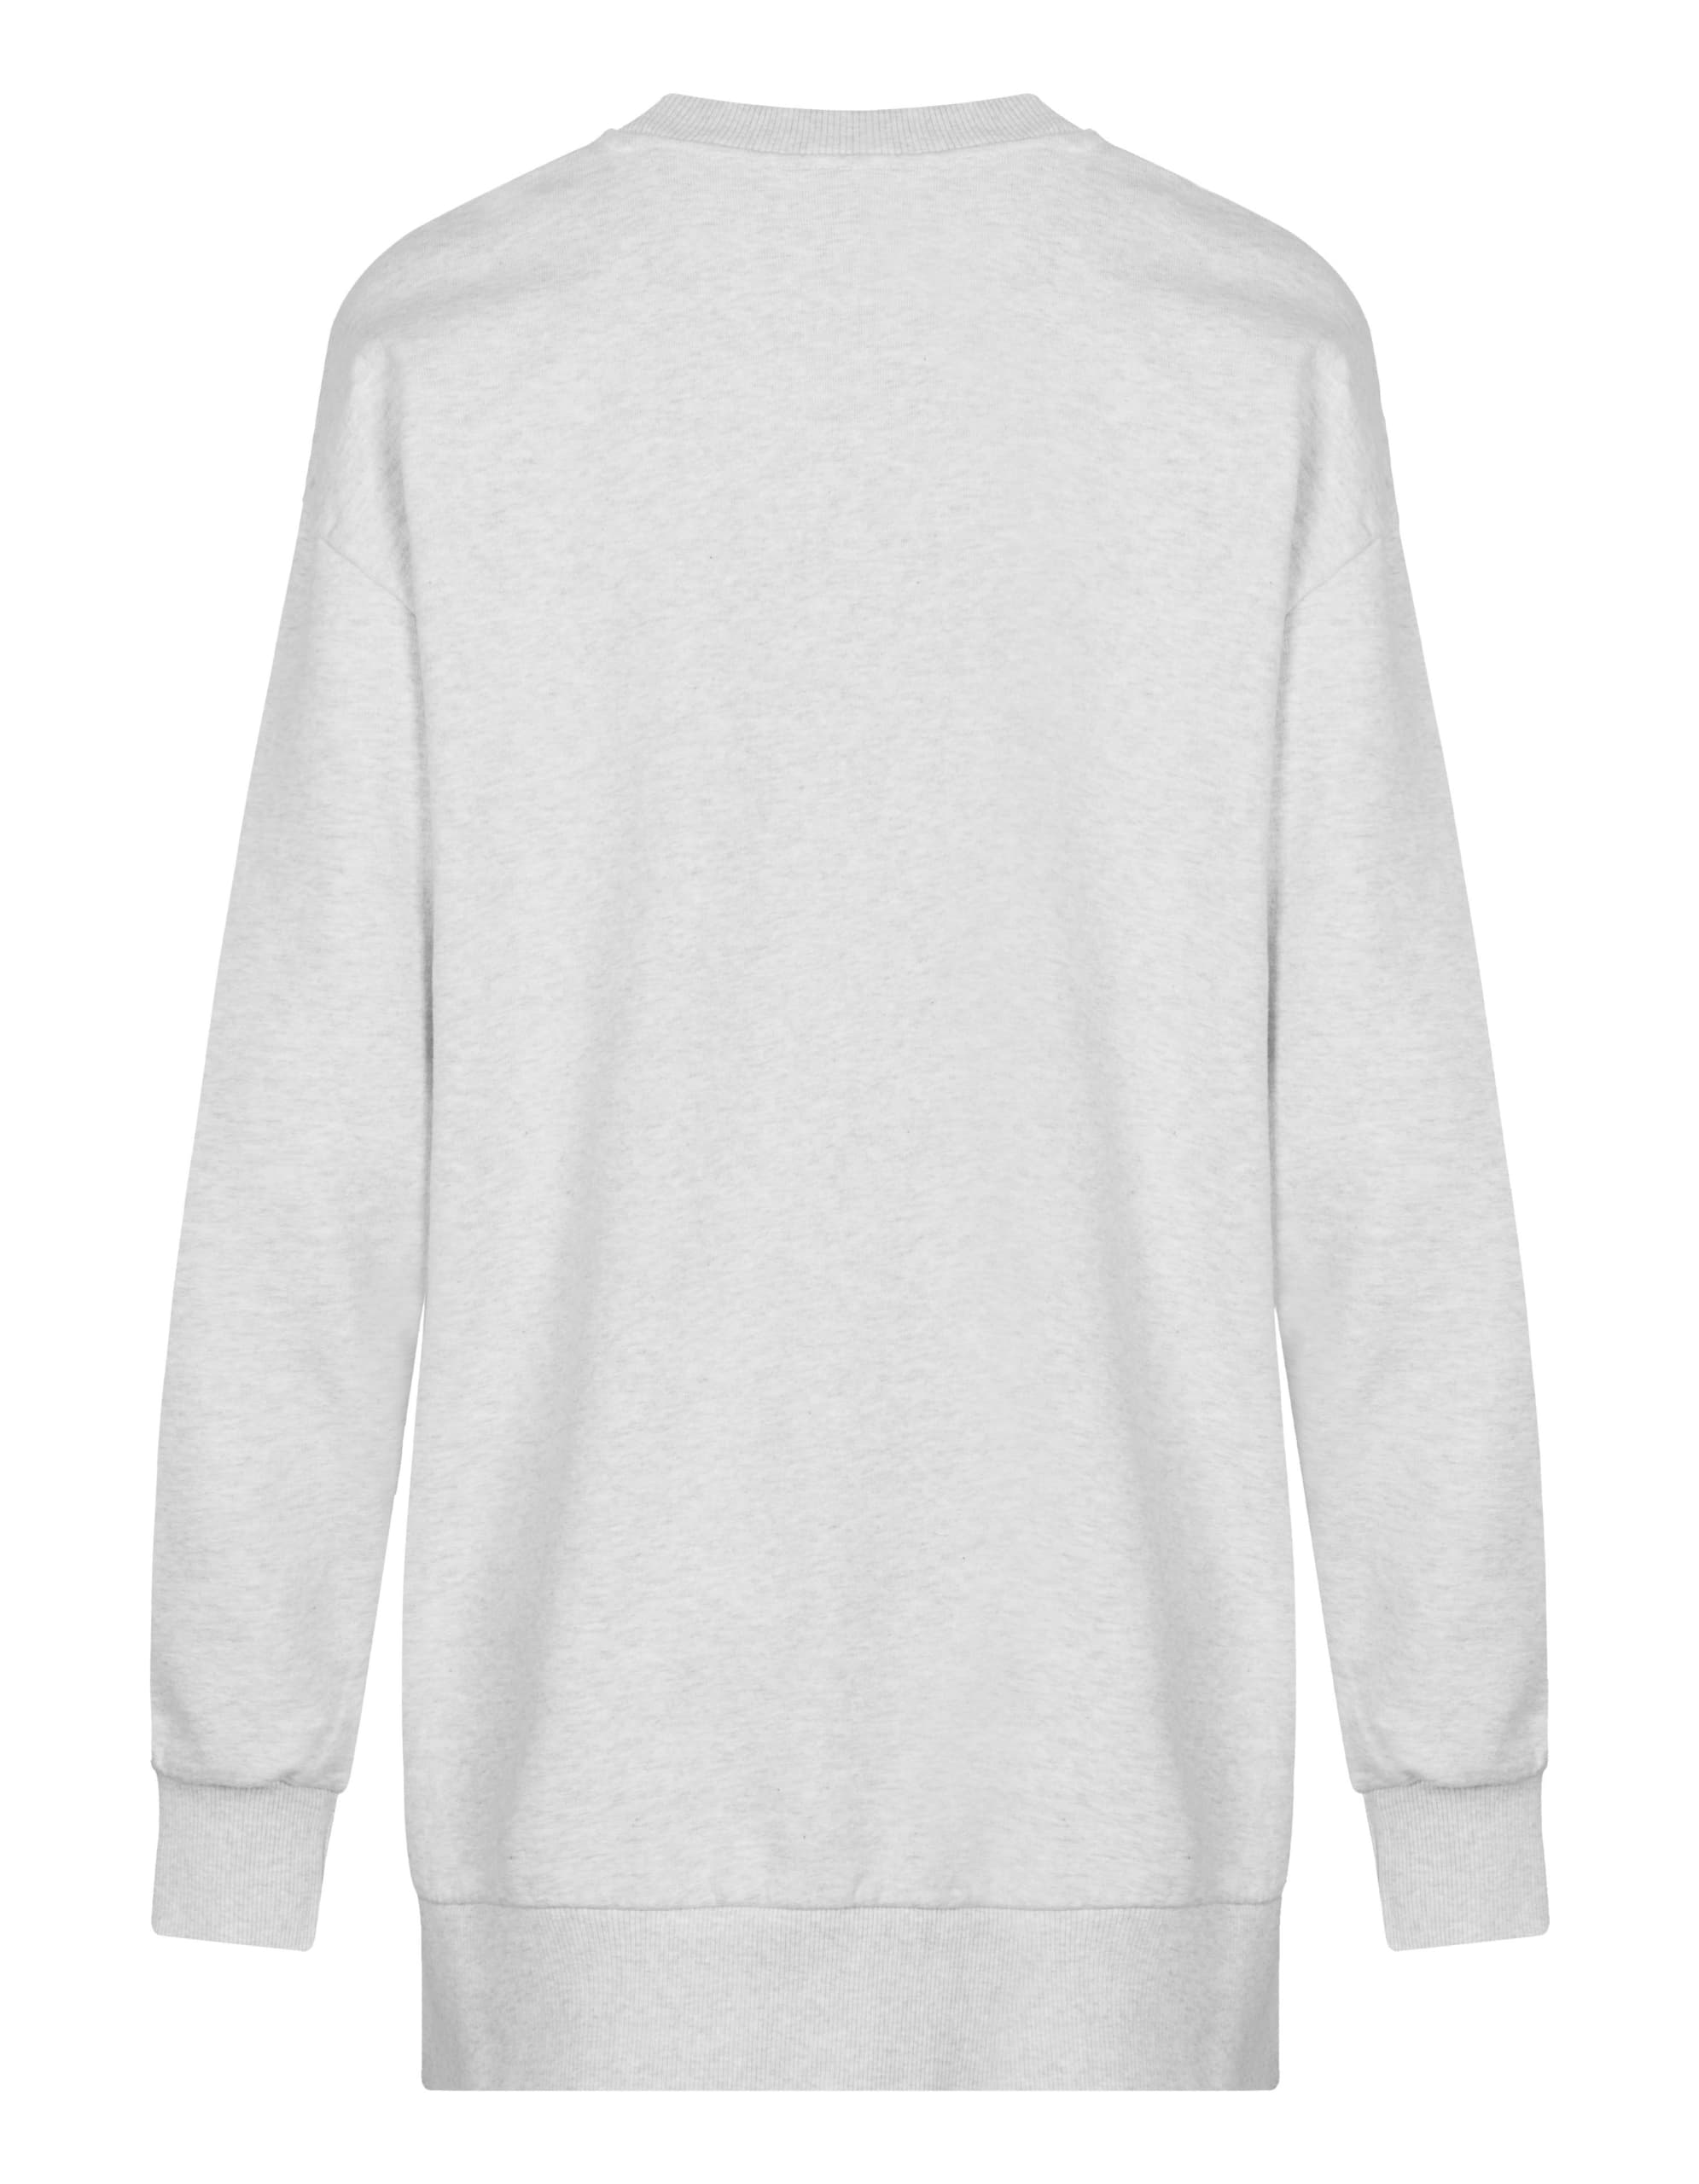 Relaxed Crew Sweatshirt, Light Grey Melange Galaxy, L